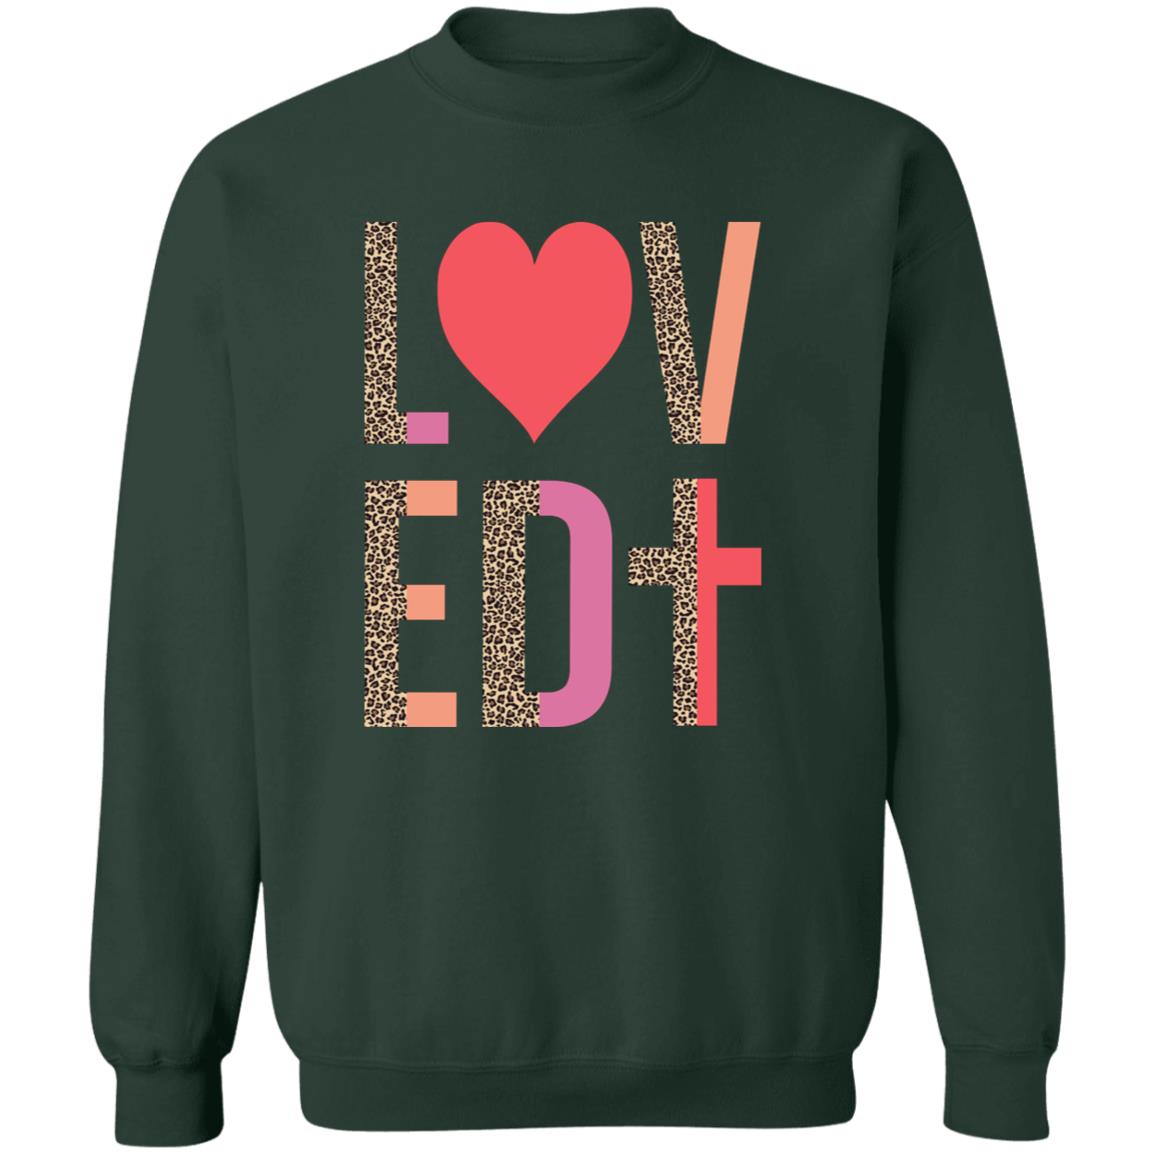 LOVED + Sweatshirt